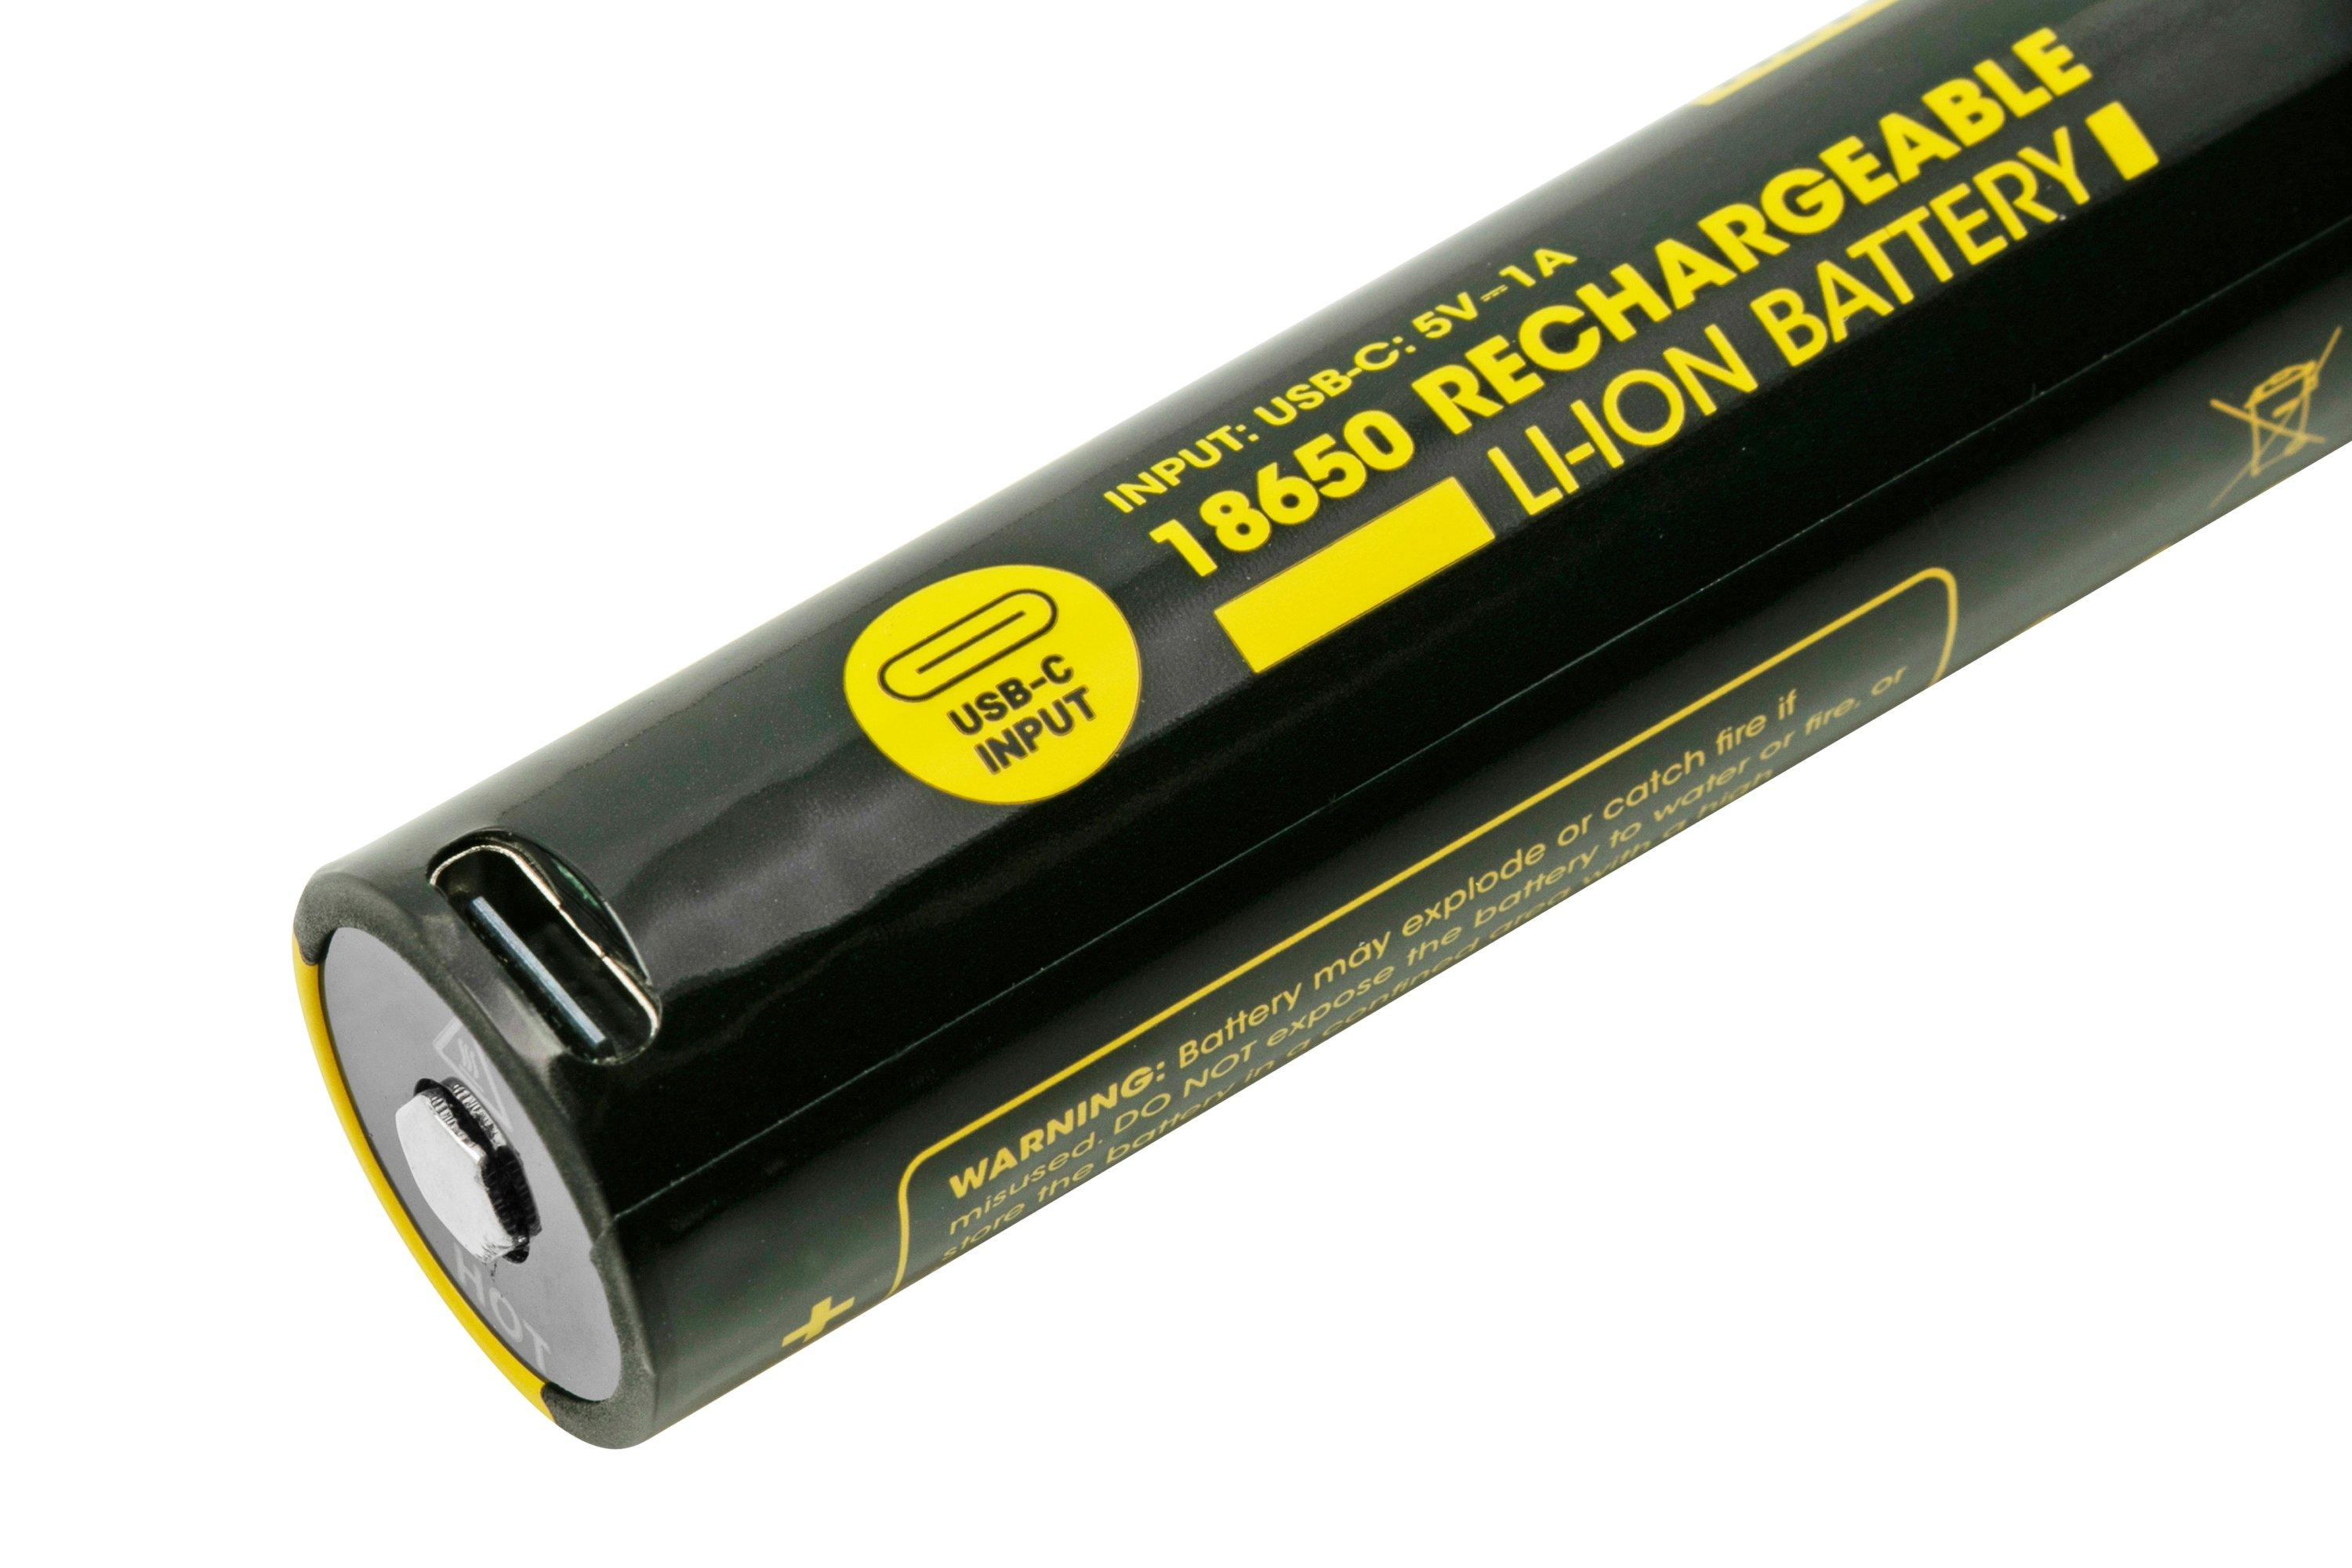 Nitecore NL1836R USB-C rechargeable 18650 Li-ion battery, mAh | Advantageously shopping at Knivesandtools.com